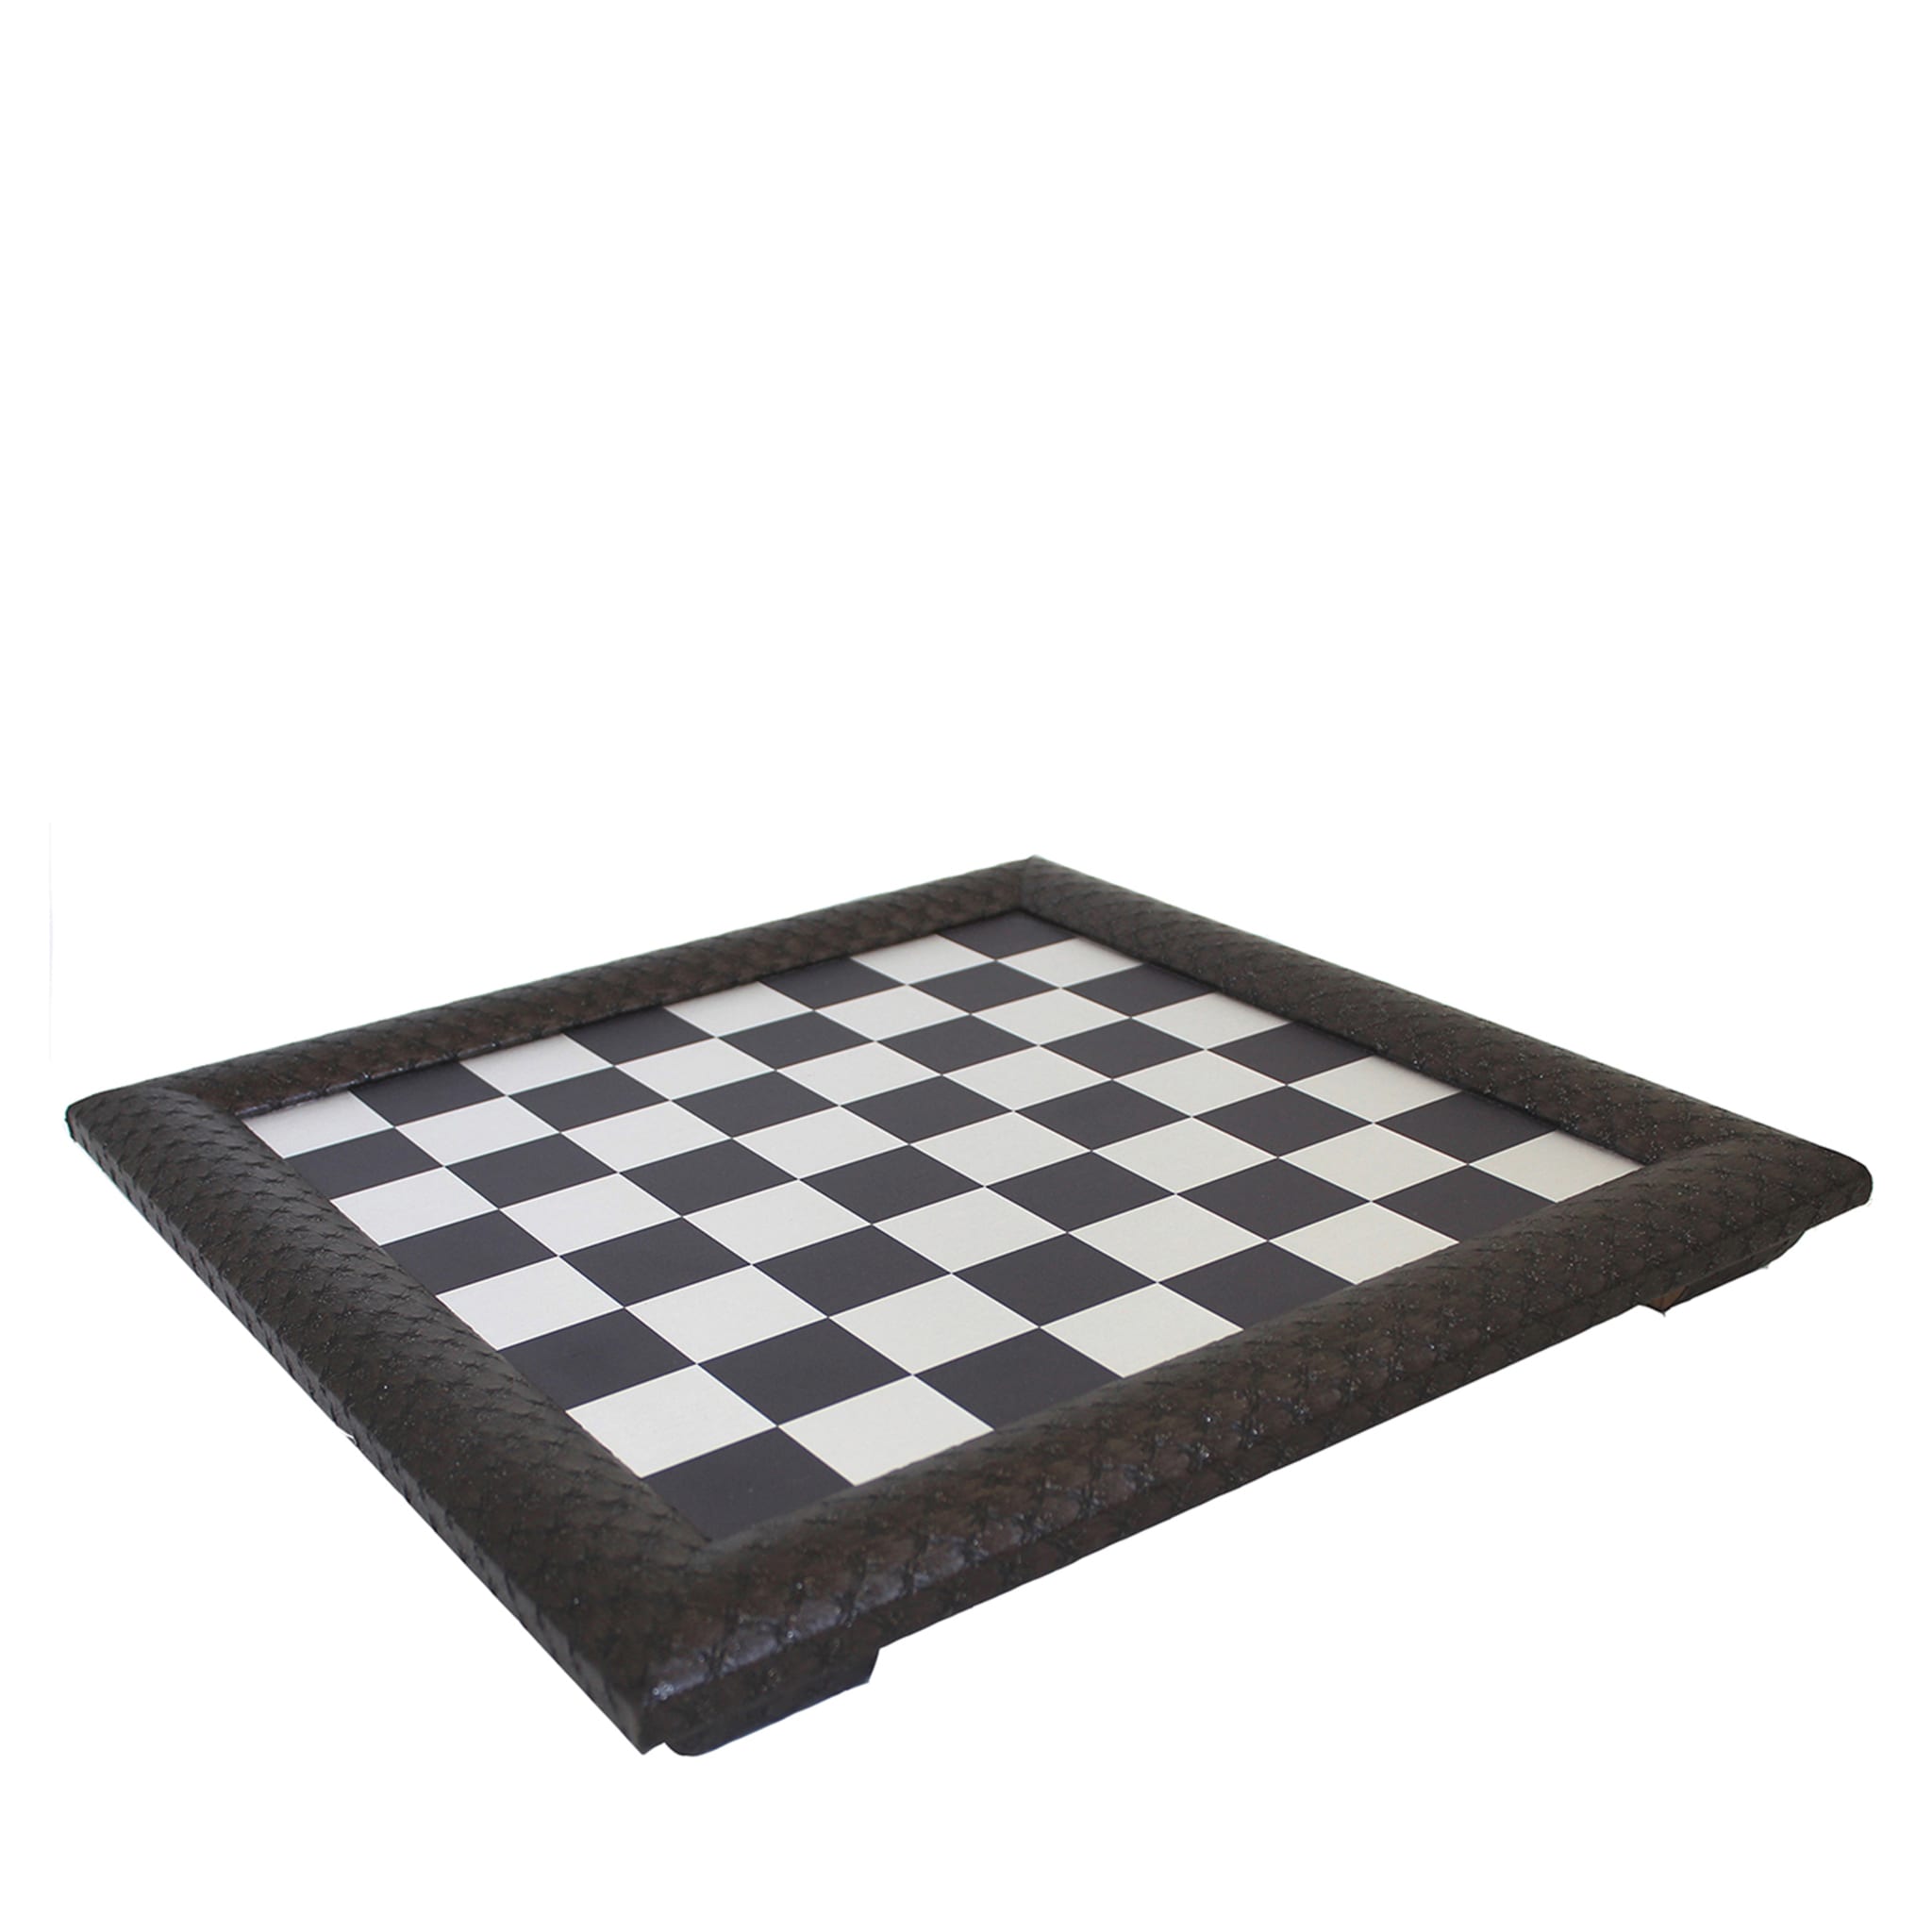 Staunton Elegance Chess Set - Alternative view 1